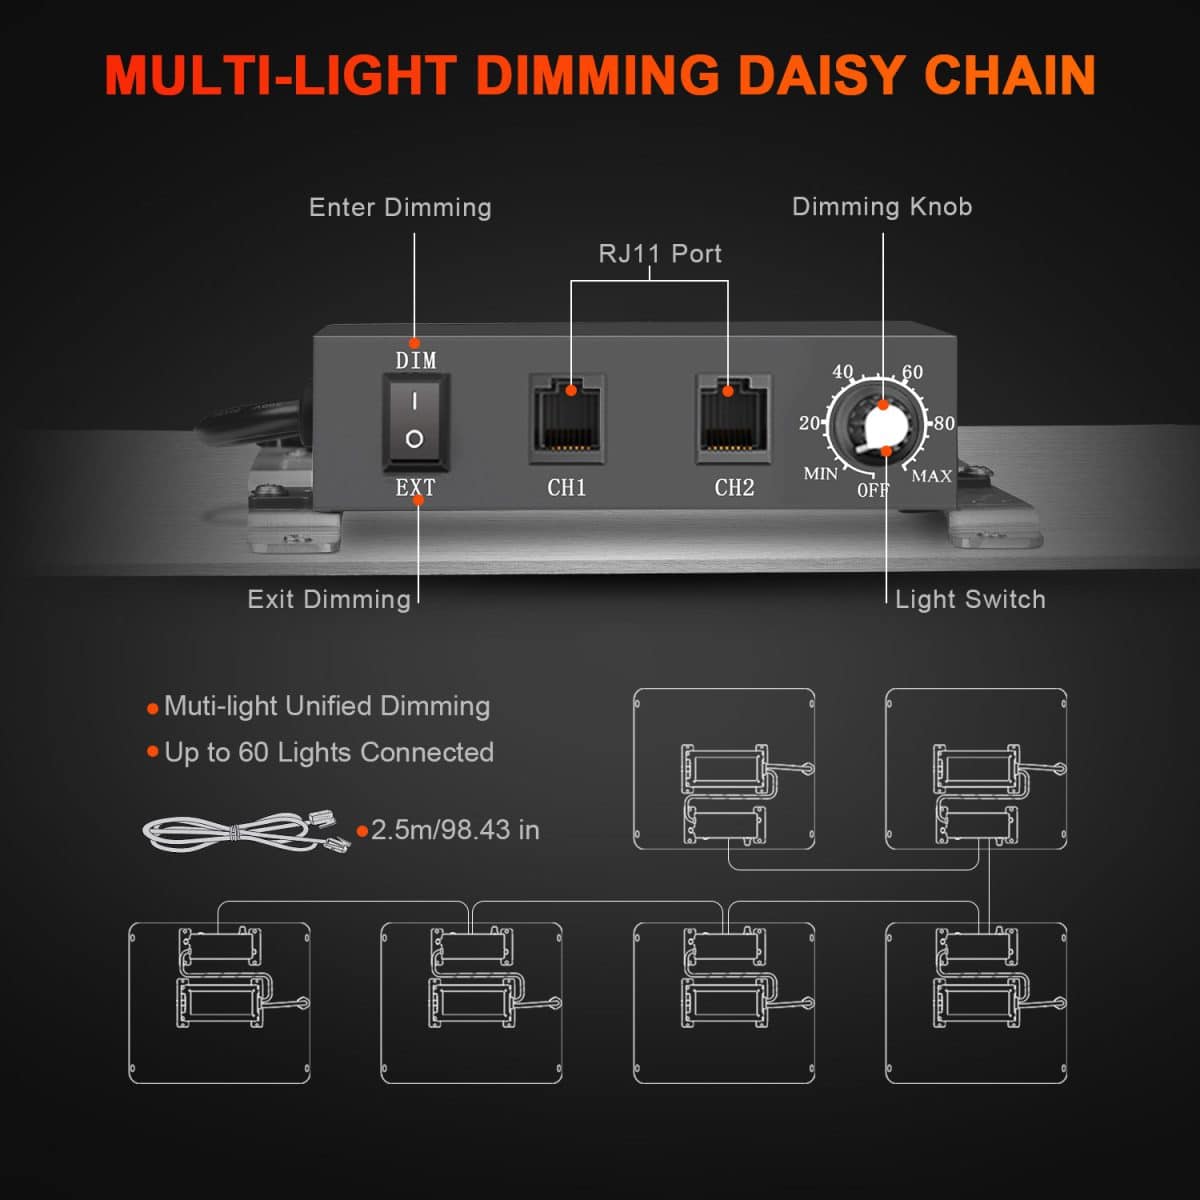 Multi-Light Dimming Daisy Chain